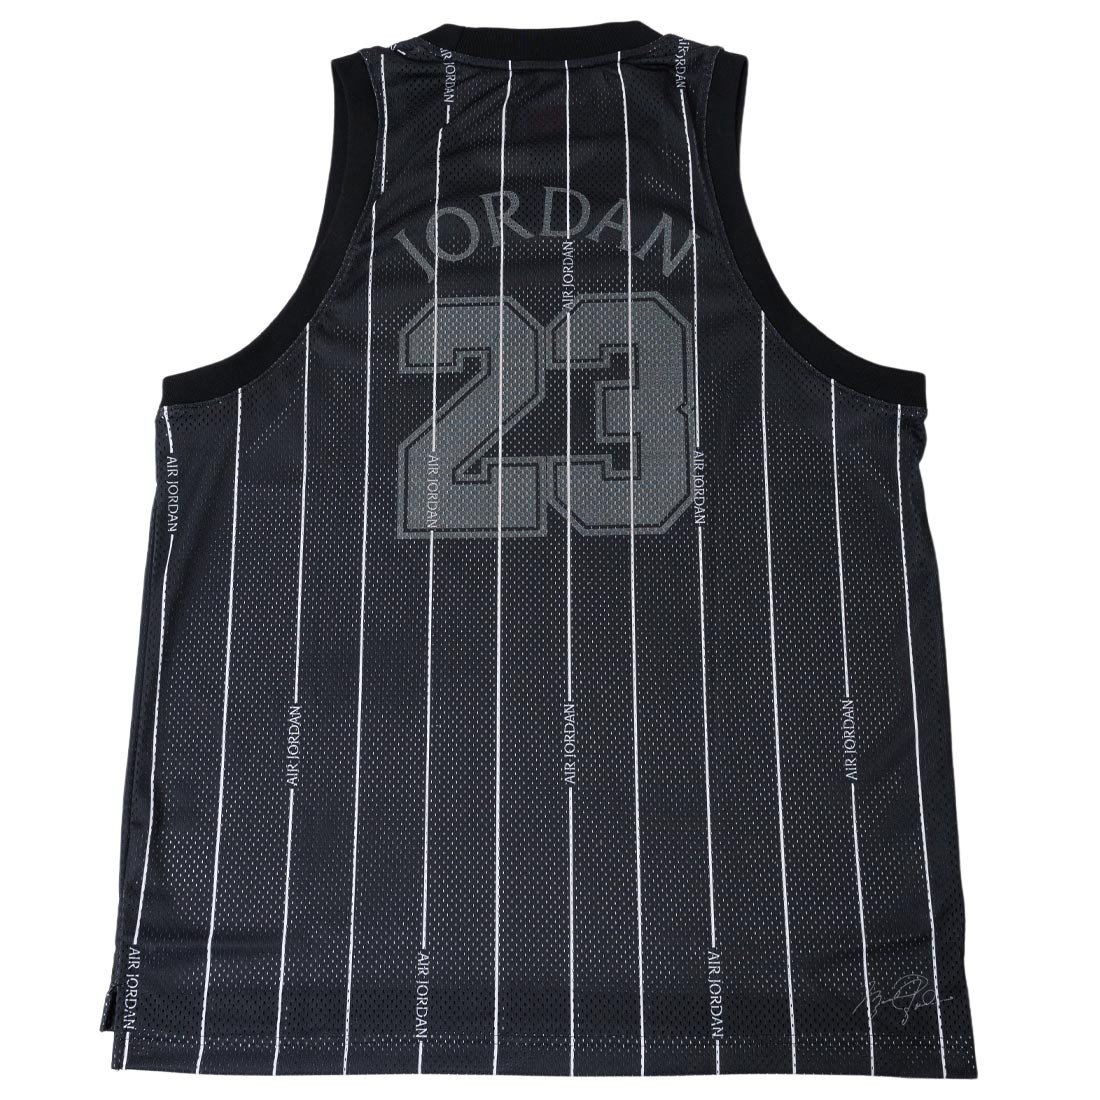 NWT Air Jordan Men's Grey & Black Basketball Jersey Size Small